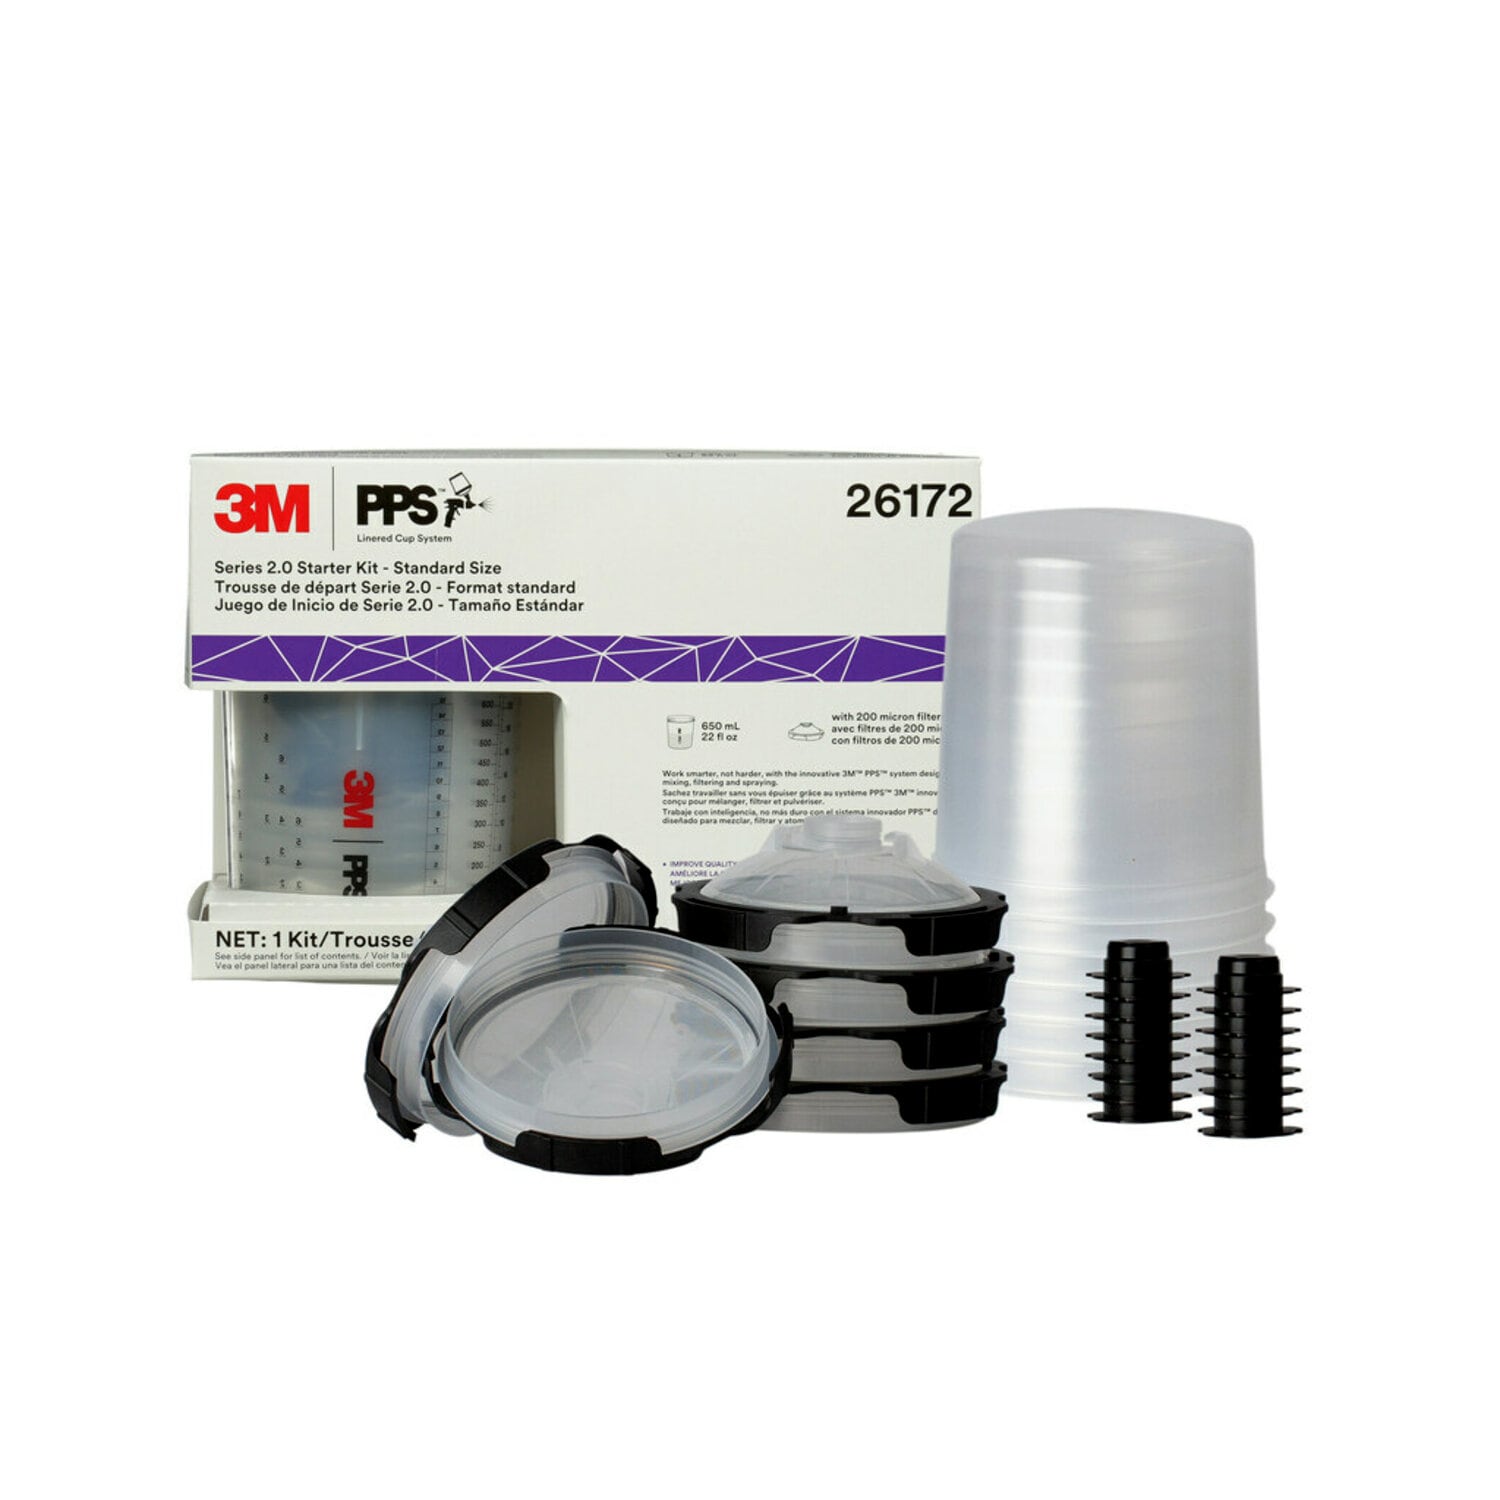 7100287073 - 3M PPS Series 2.0 6-Pack Starter Kit, 26172, Standard (22 fl oz, 650
mL), 200 Micron Filter, 2 kits per case